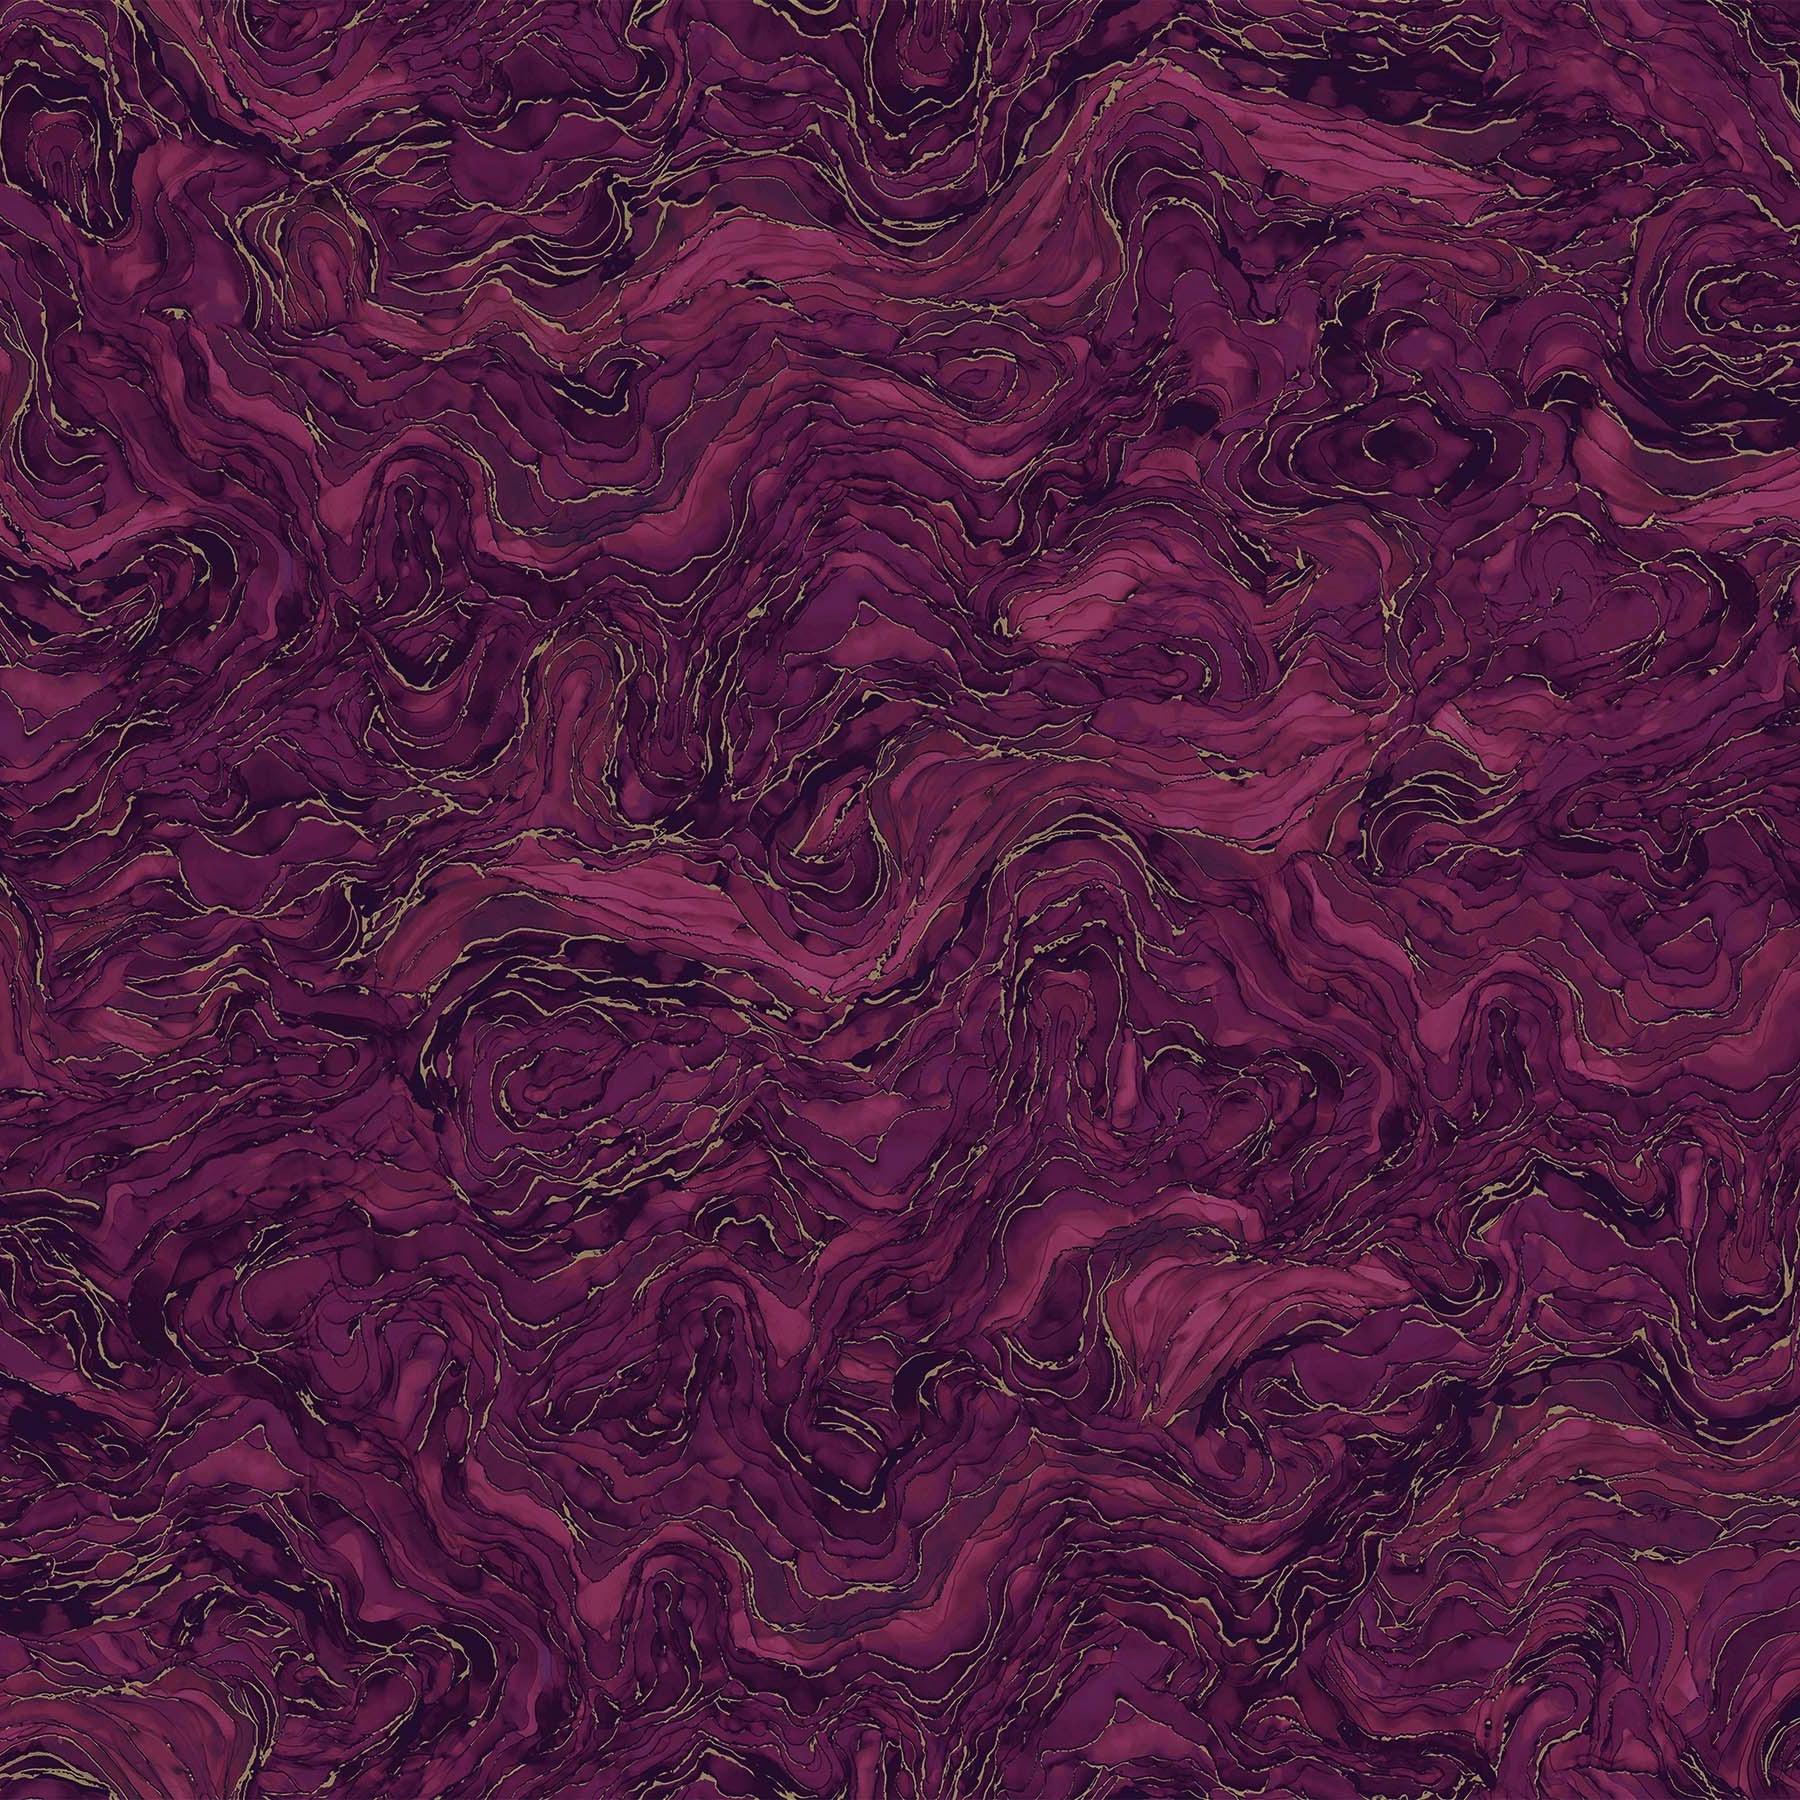 Midas Touch Magenta Abstract Swirl Fabric-Northcott Fabrics-My Favorite Quilt Store